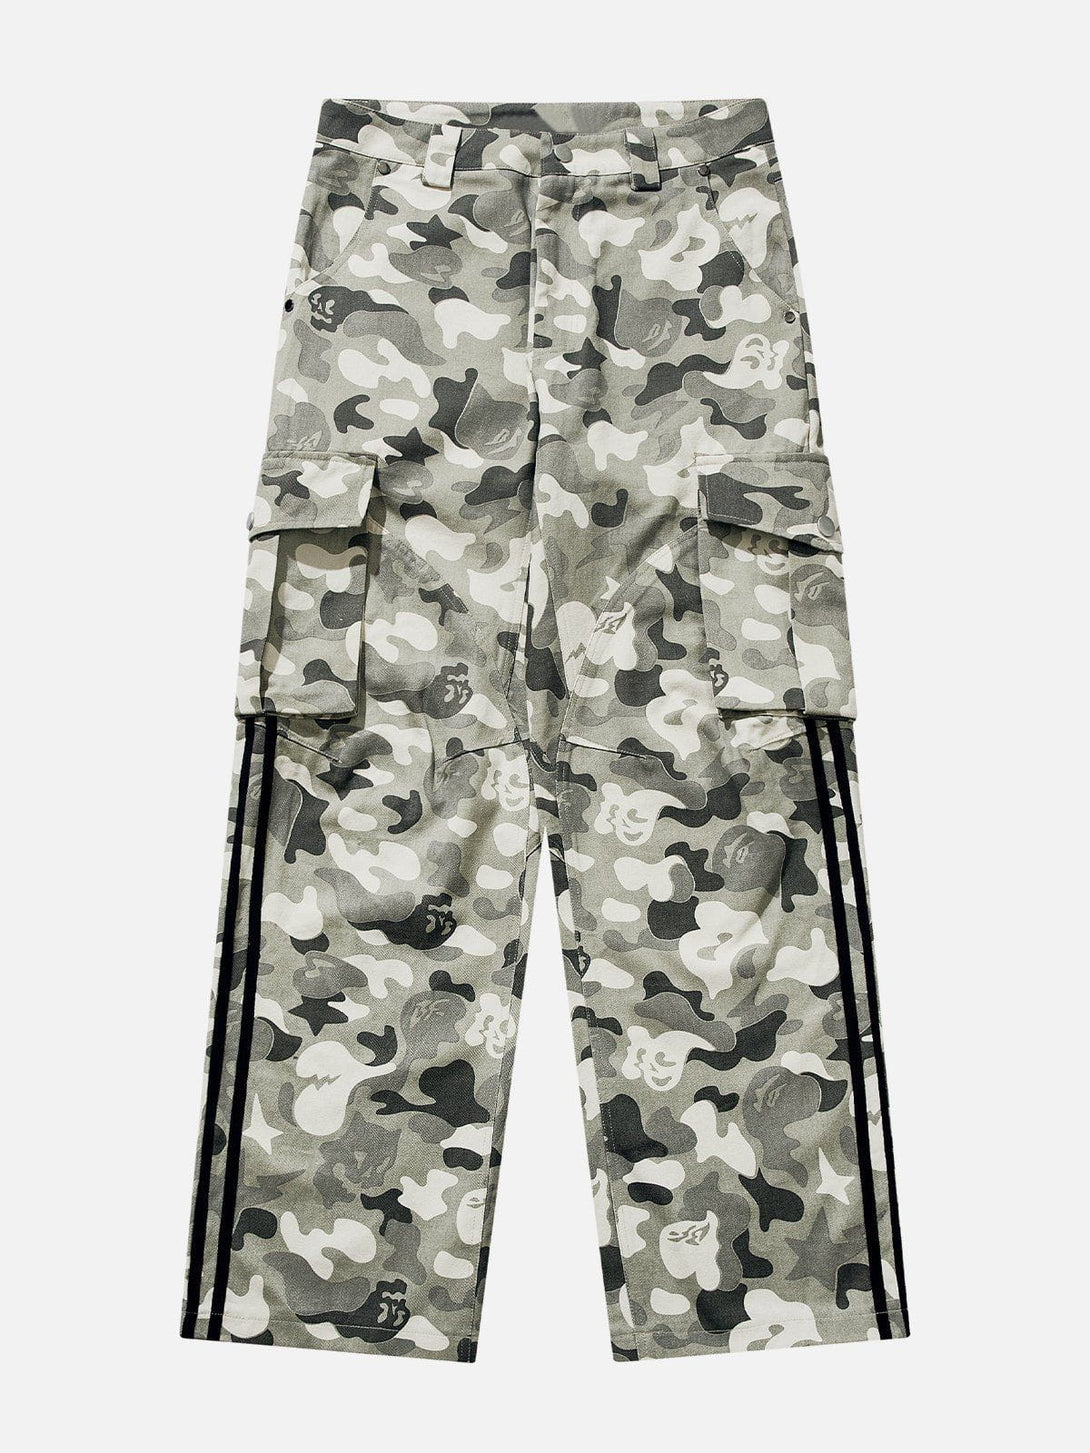 Levefly - Camouflage Multi-pocket Cargo Pants - Streetwear Fashion - levefly.com